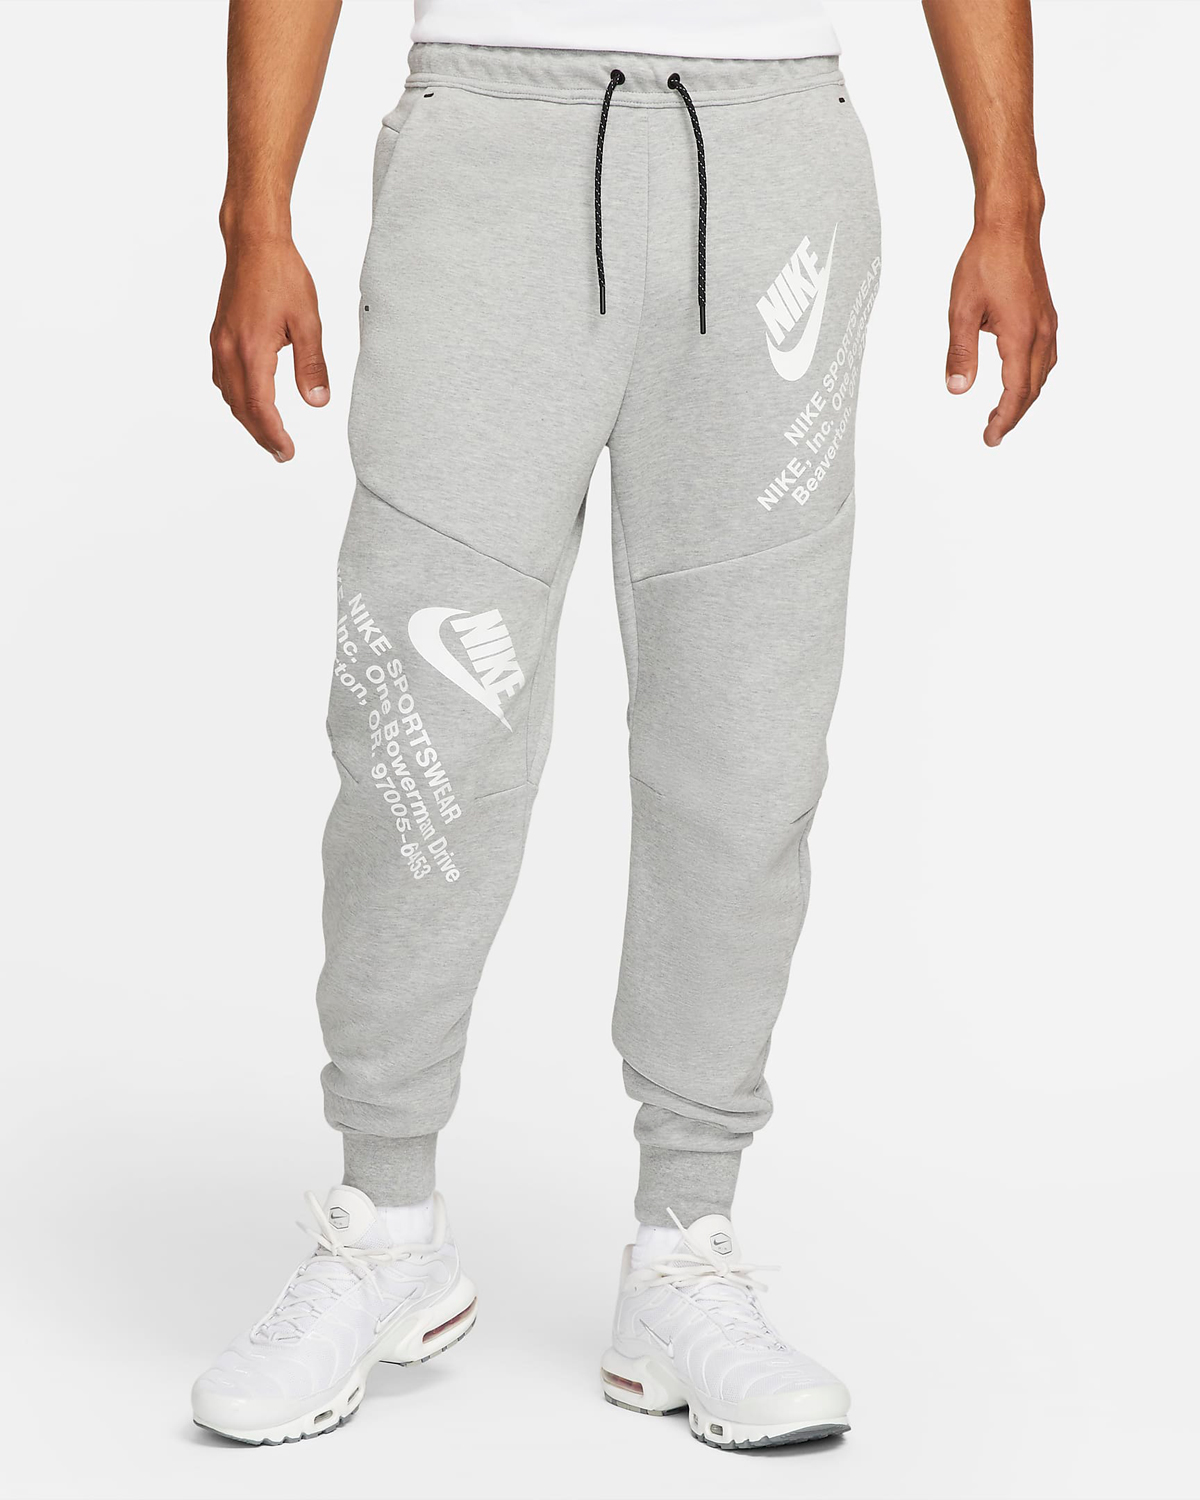 nike-tech-fleece-graphic-joggers-pants-grey-1